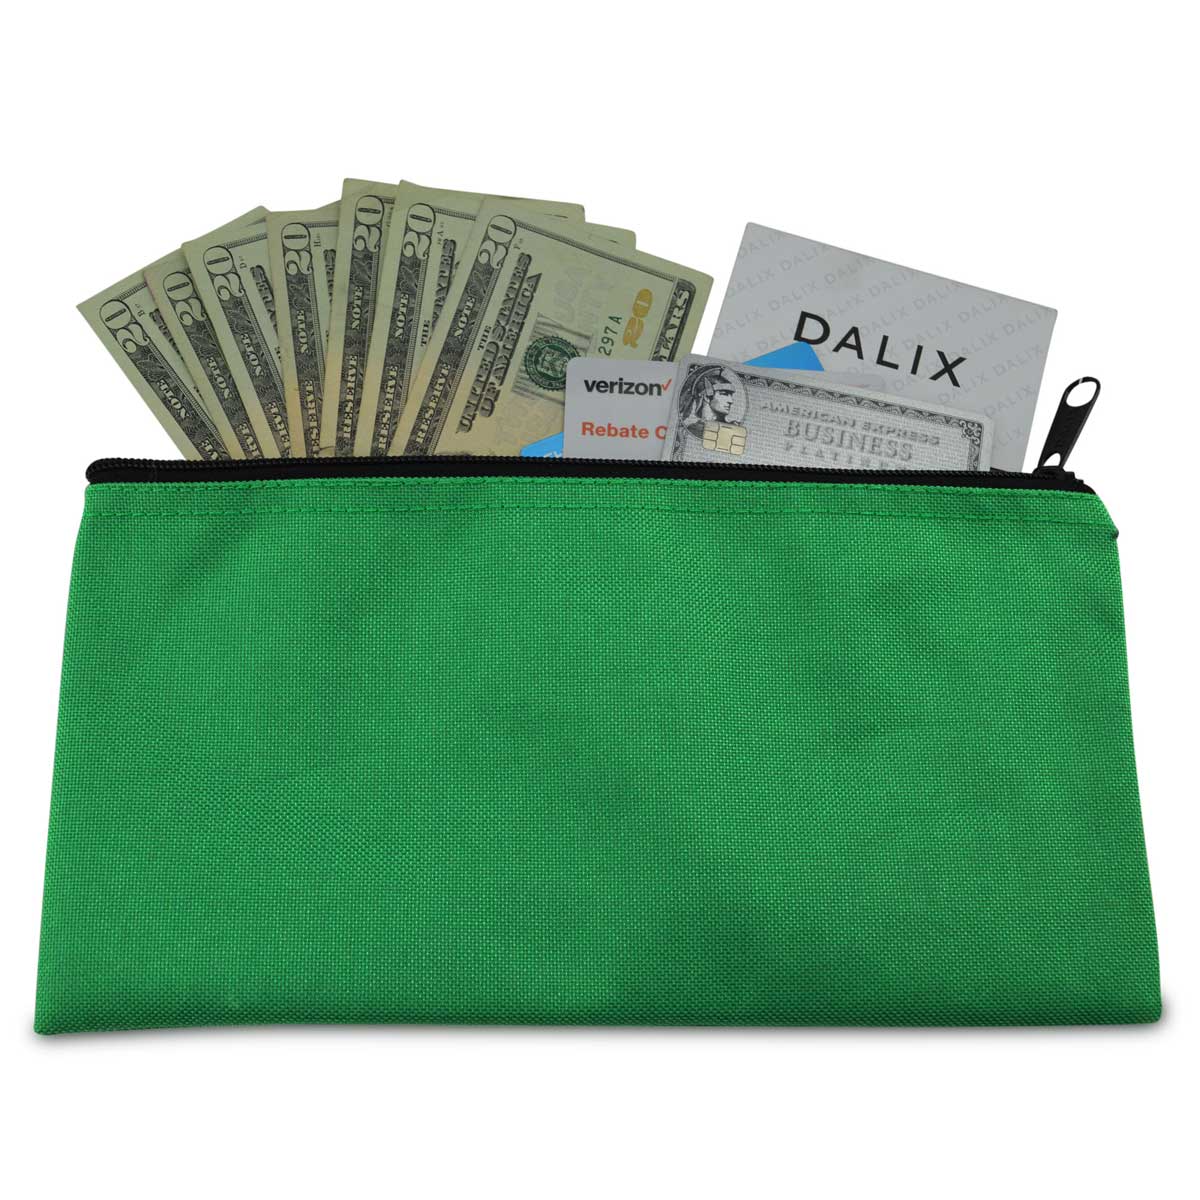 DALIX Bank Bags Money Pouch Securit Deposit Utility Zipper Coin Bag Black 2  Pack